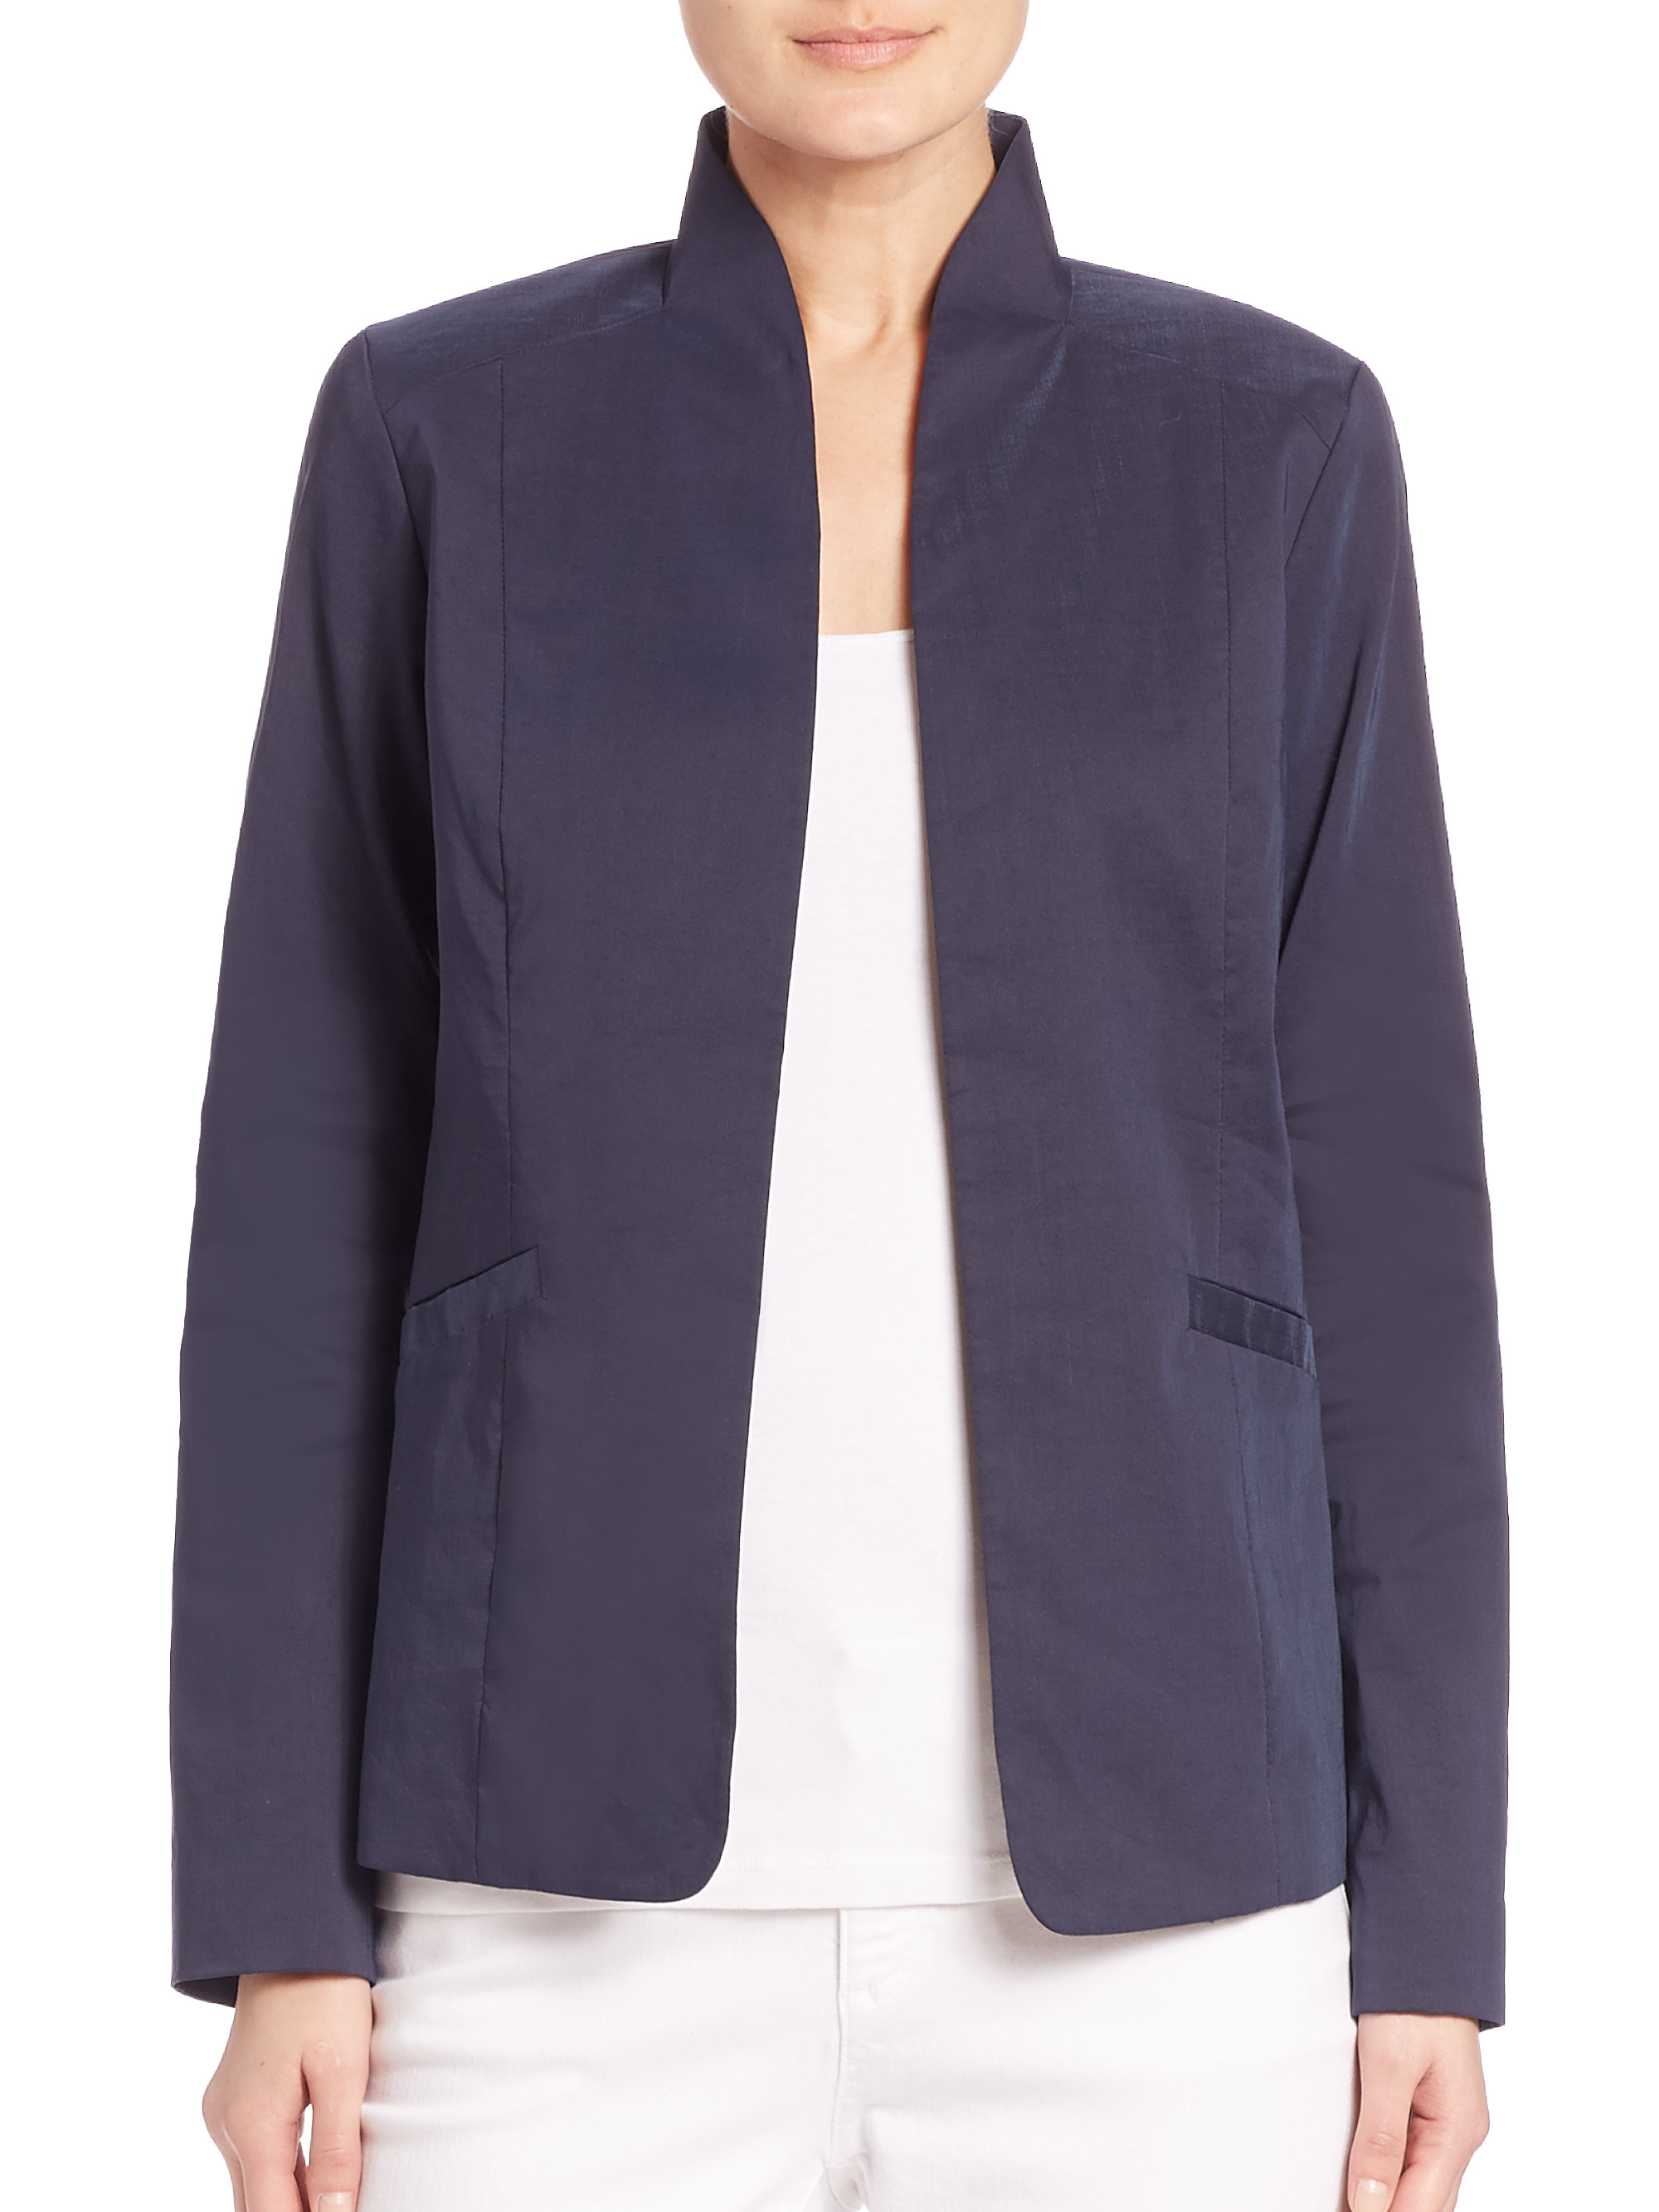 Lyst - Eileen Fisher High-collar Jacket in Blue